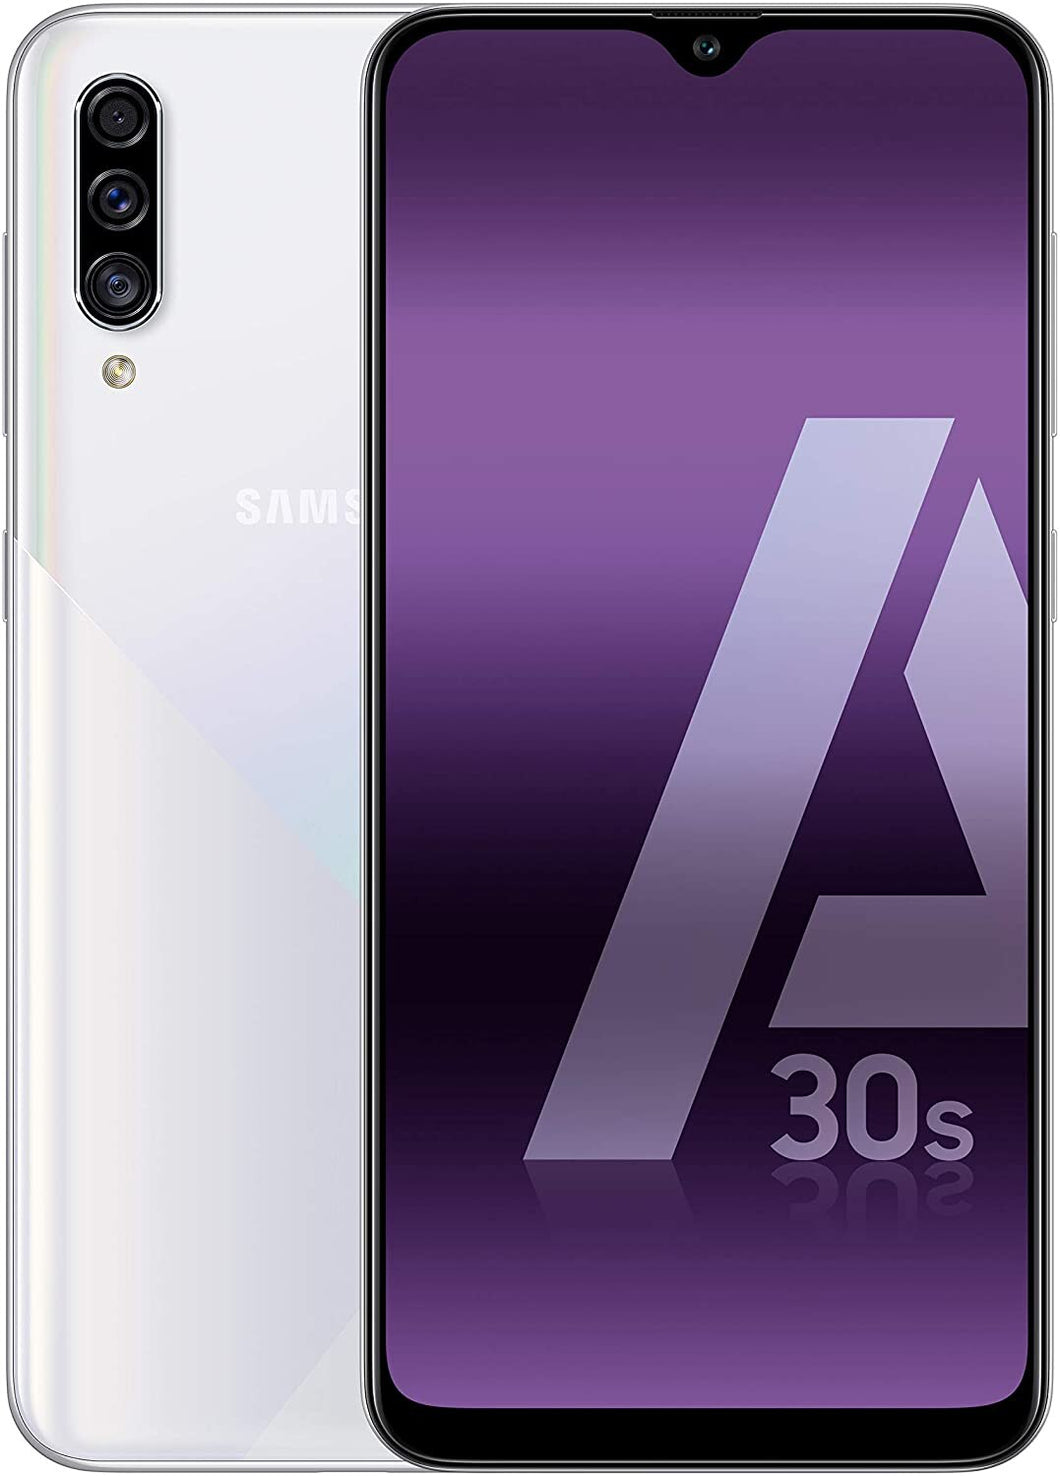 Samsung Galaxy A30s phone, White (White) Color, 128 GB internal memory, 4 GB RAM, 6 Super AMOLED screen.